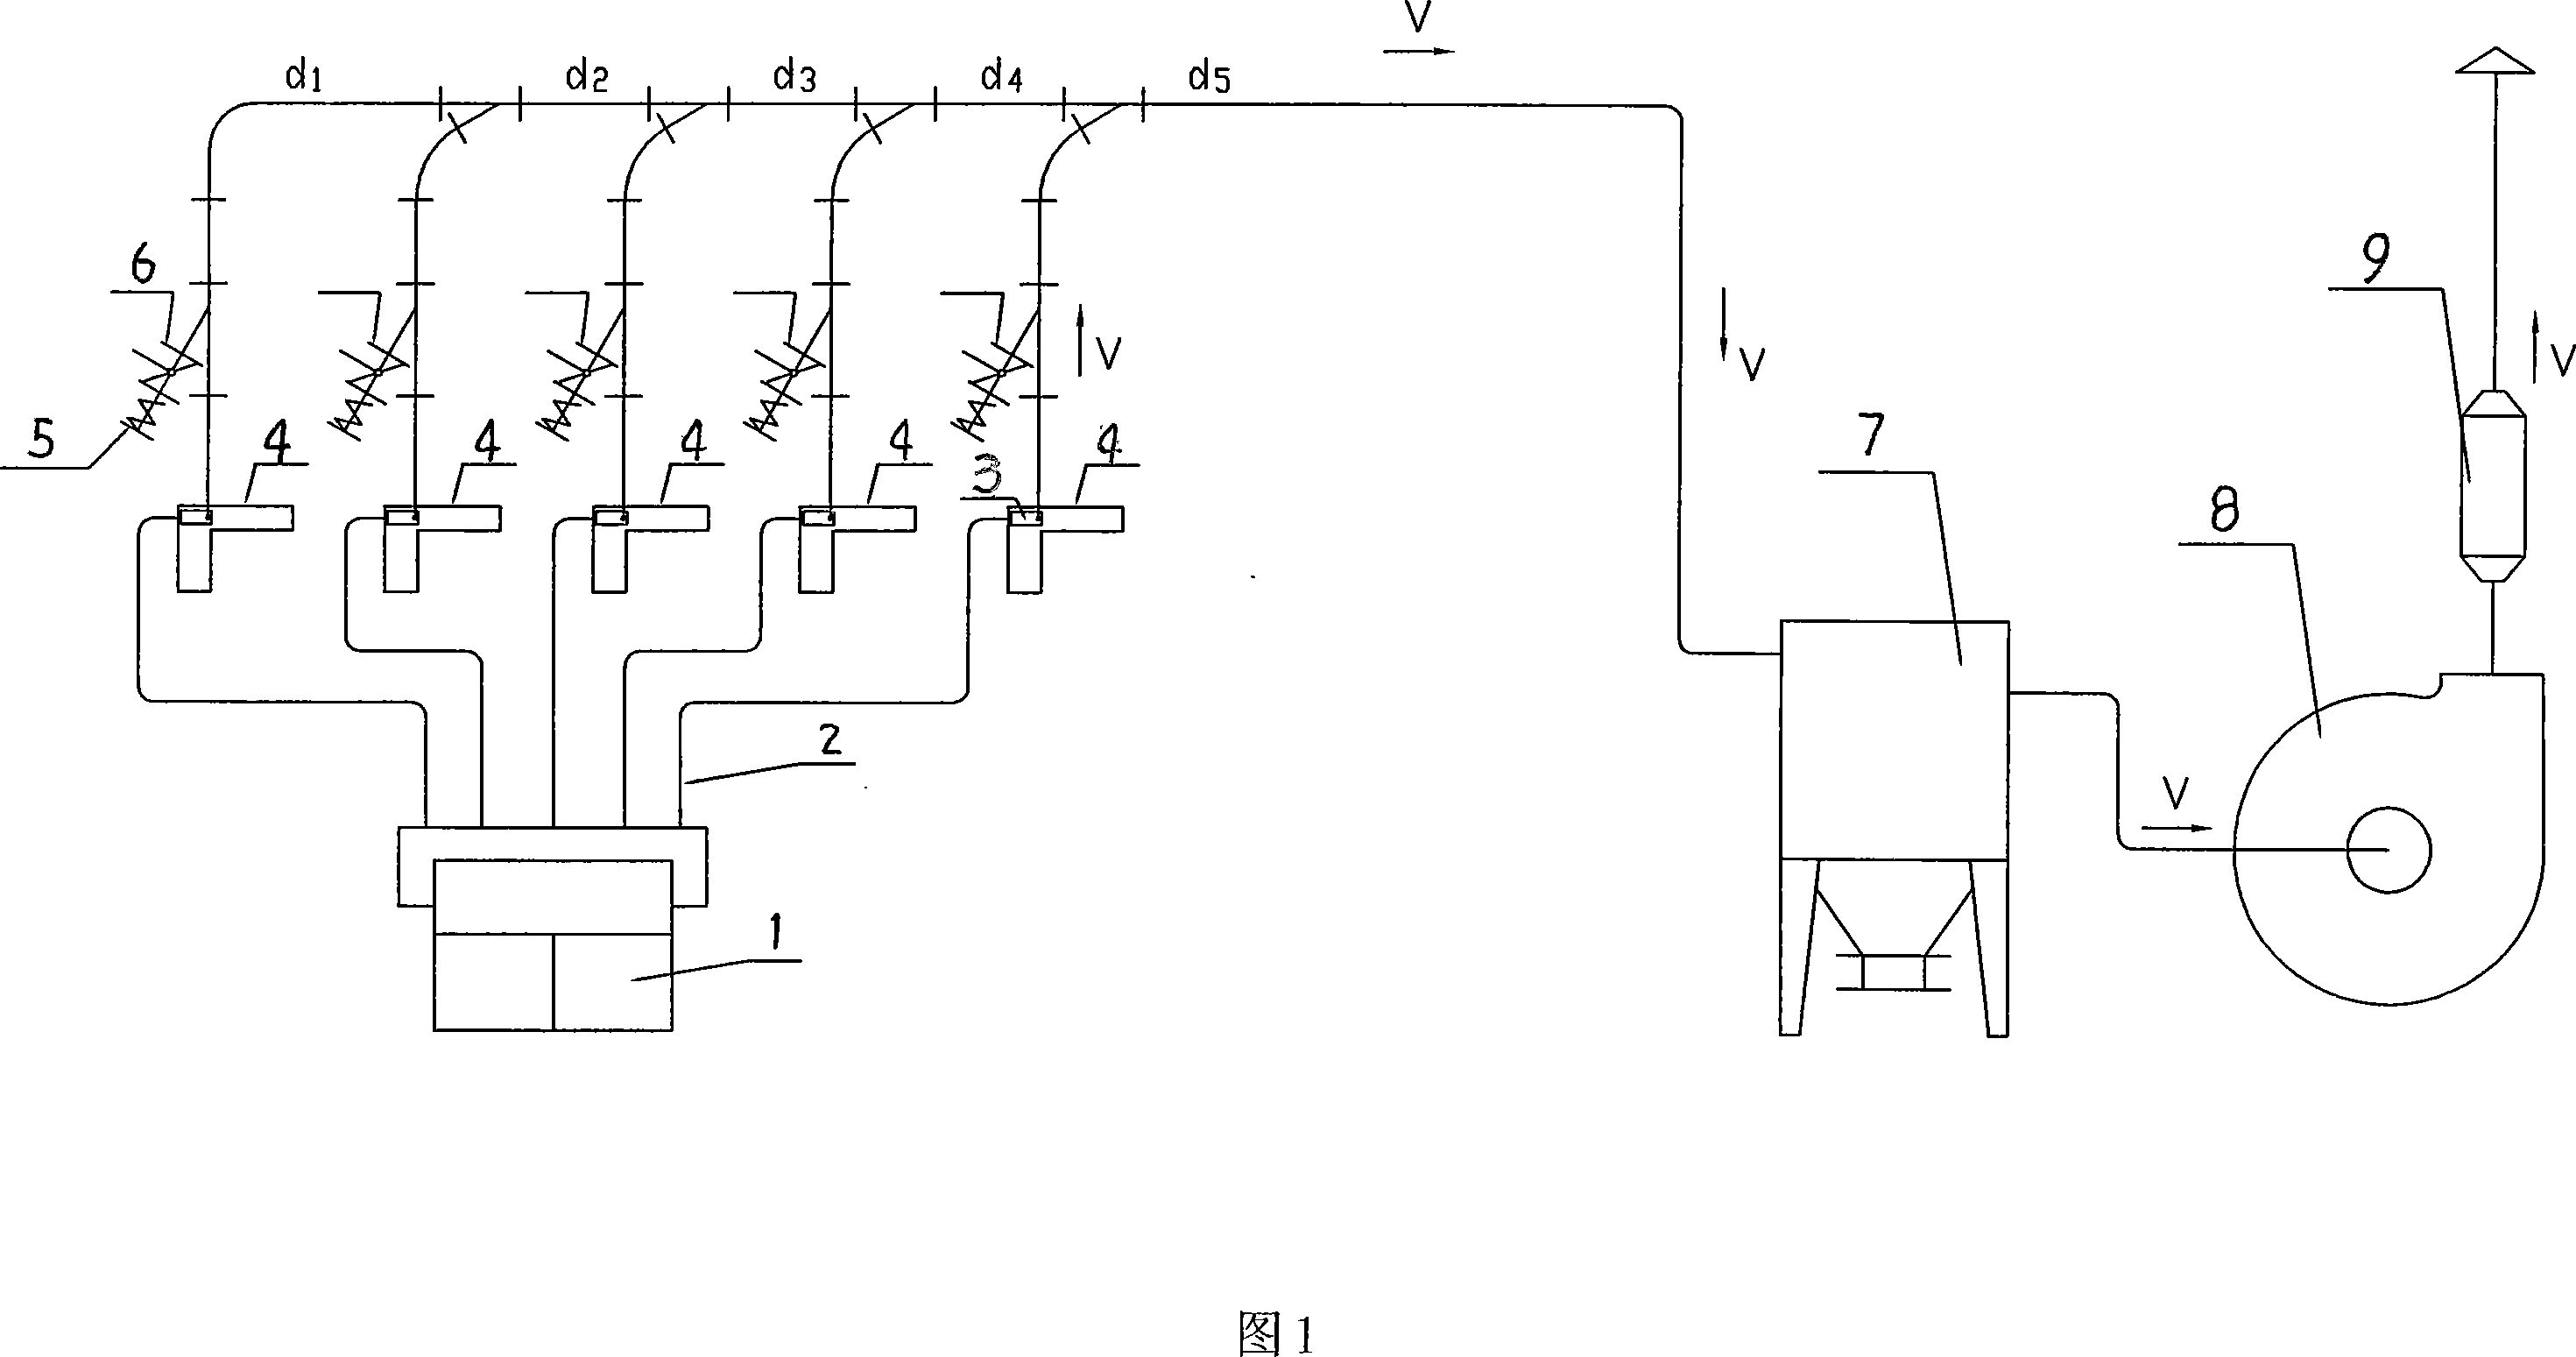 Binary isogram replacing constant-speed pneumatic conveying method